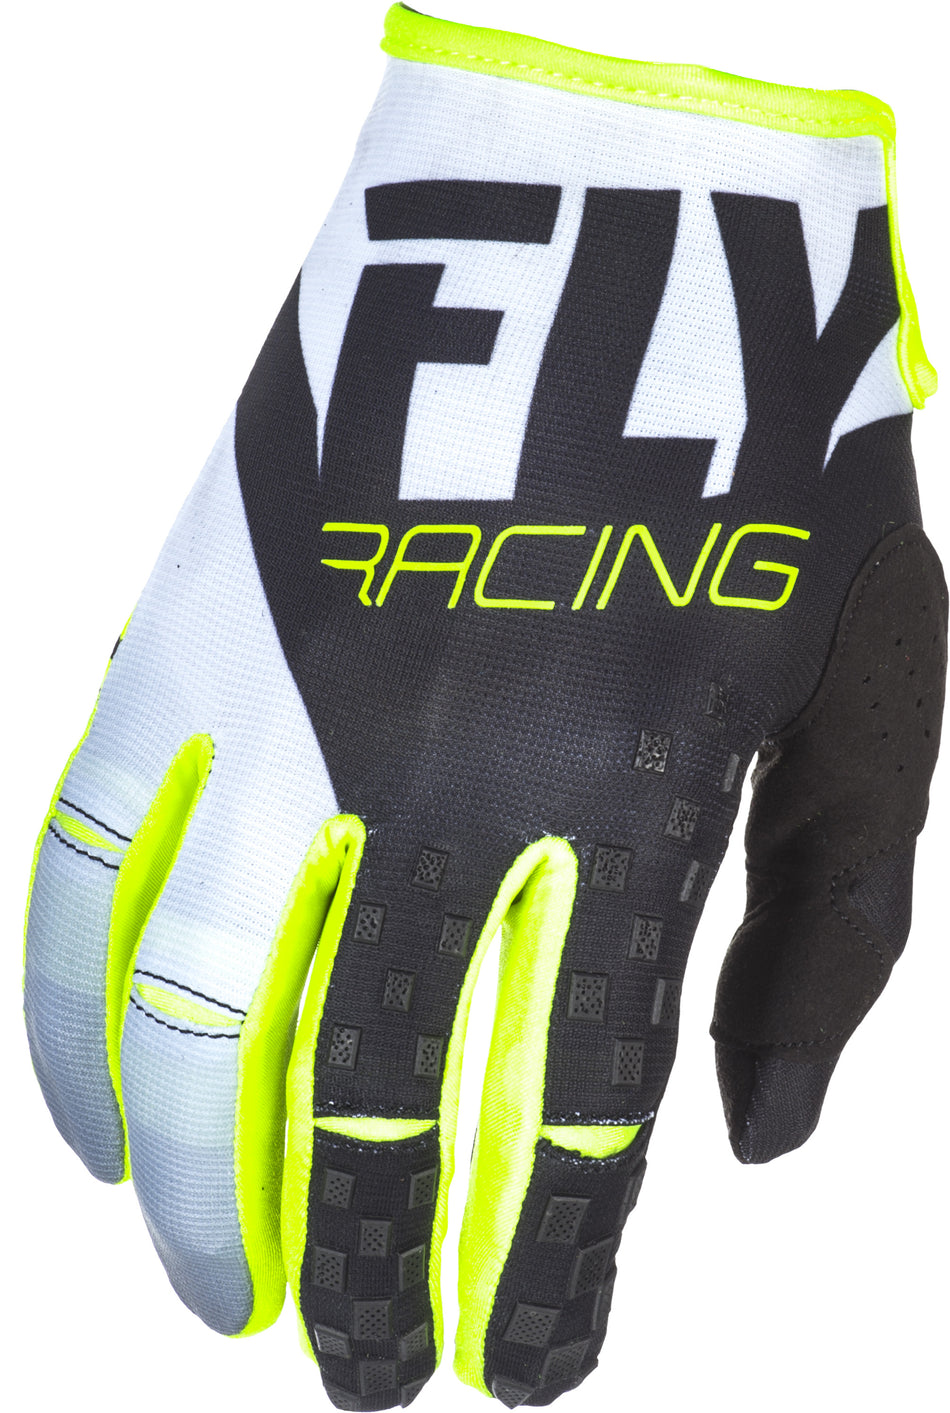 FLY RACING Kinetic Gloves Black/White/Hi-Vis Sz 8 371-41608